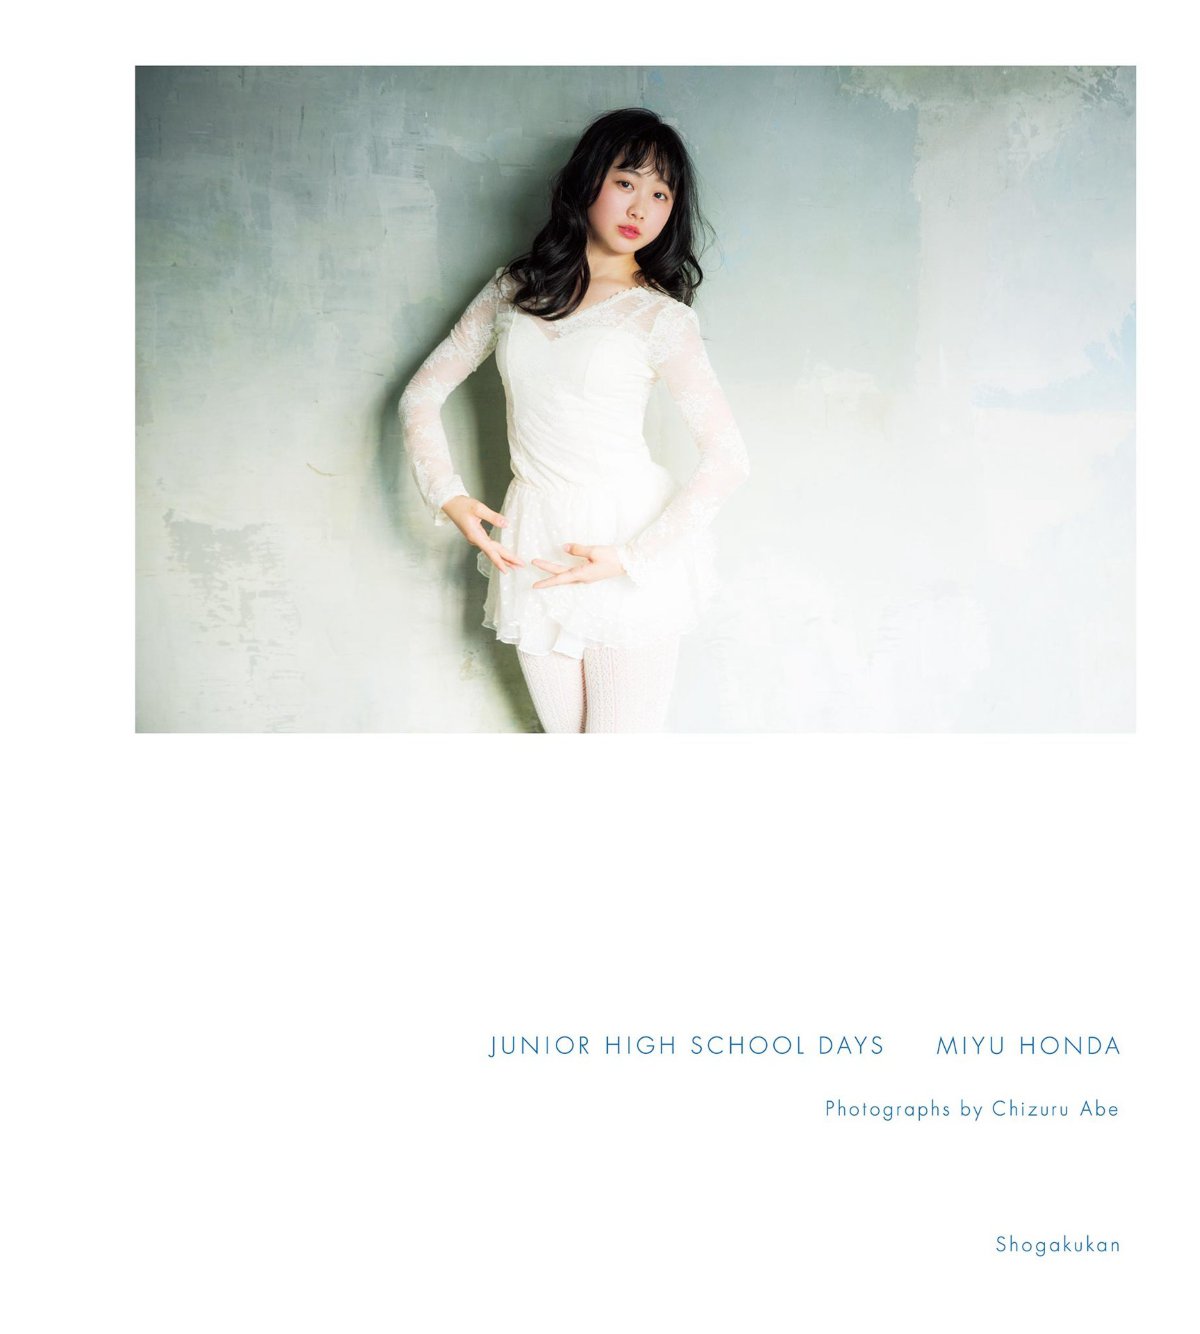 Photobook Miyu Honda 本田望結 JUNIOR HIGH SCHOOL DAYS 2020 04 30 0001 8244602074.jpg